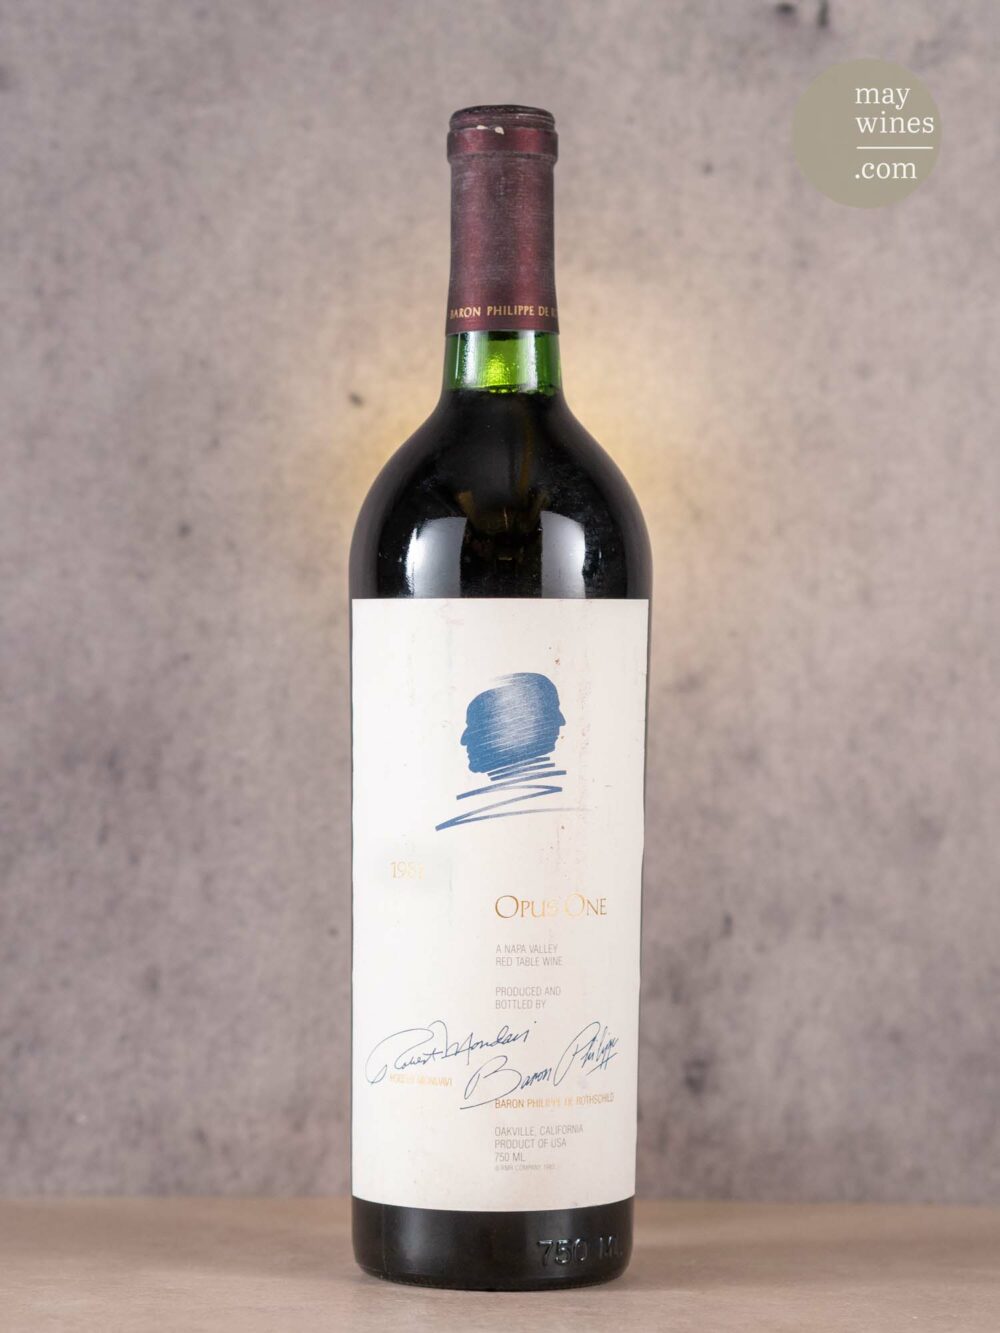 May Wines – Rotwein – 1981 Opus One - Mondavi & Rothschild